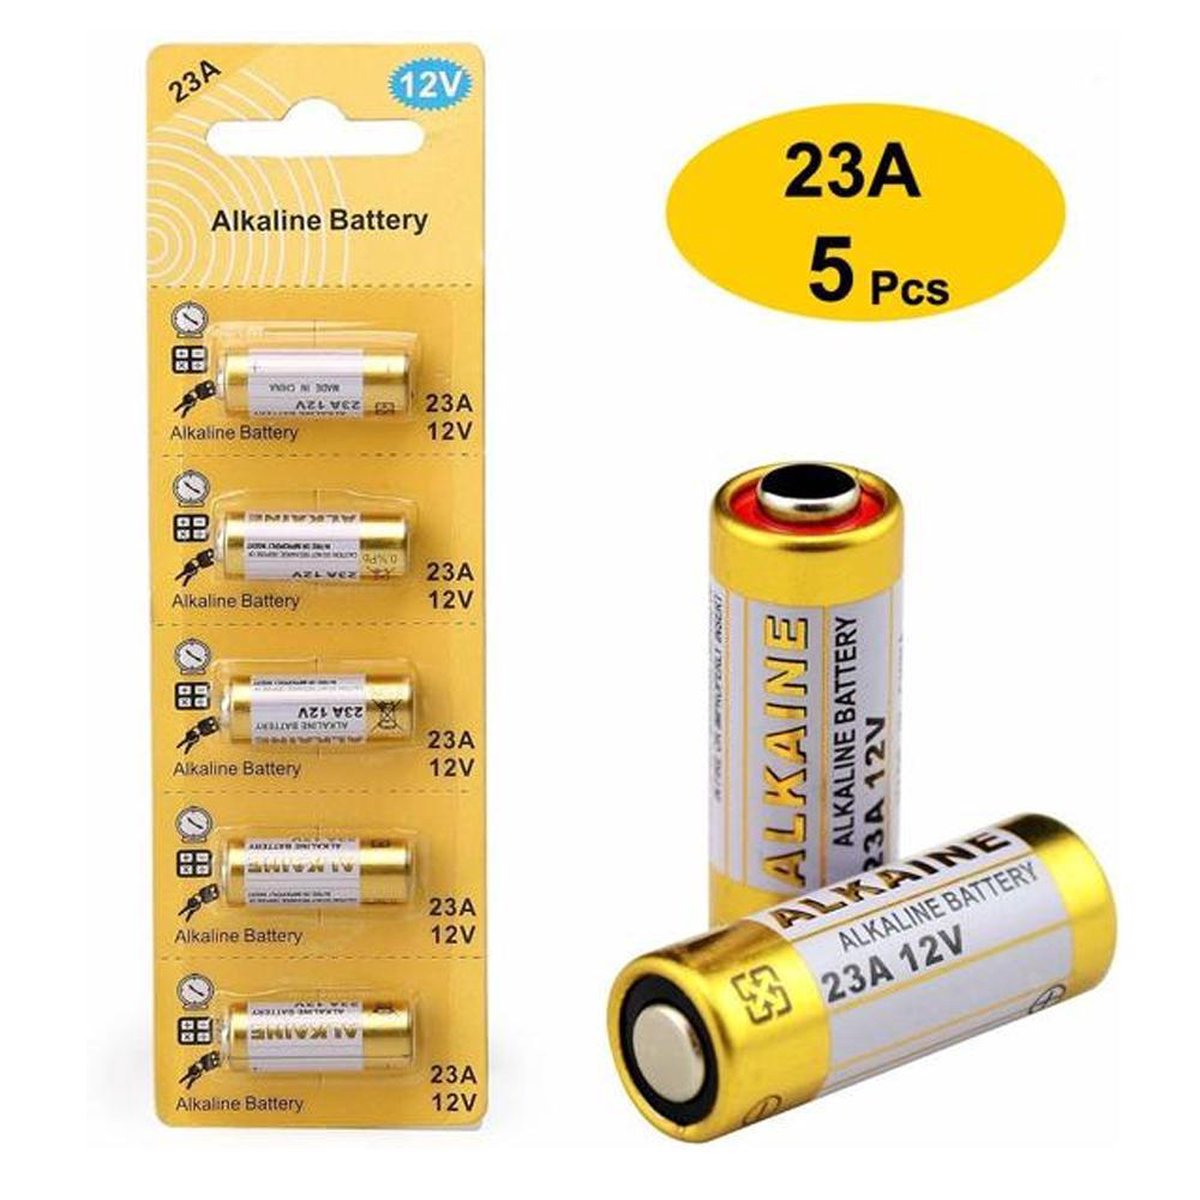 23a 12v hoge capaciteit alkaline batterijen - 5 stuks blister | bol.com